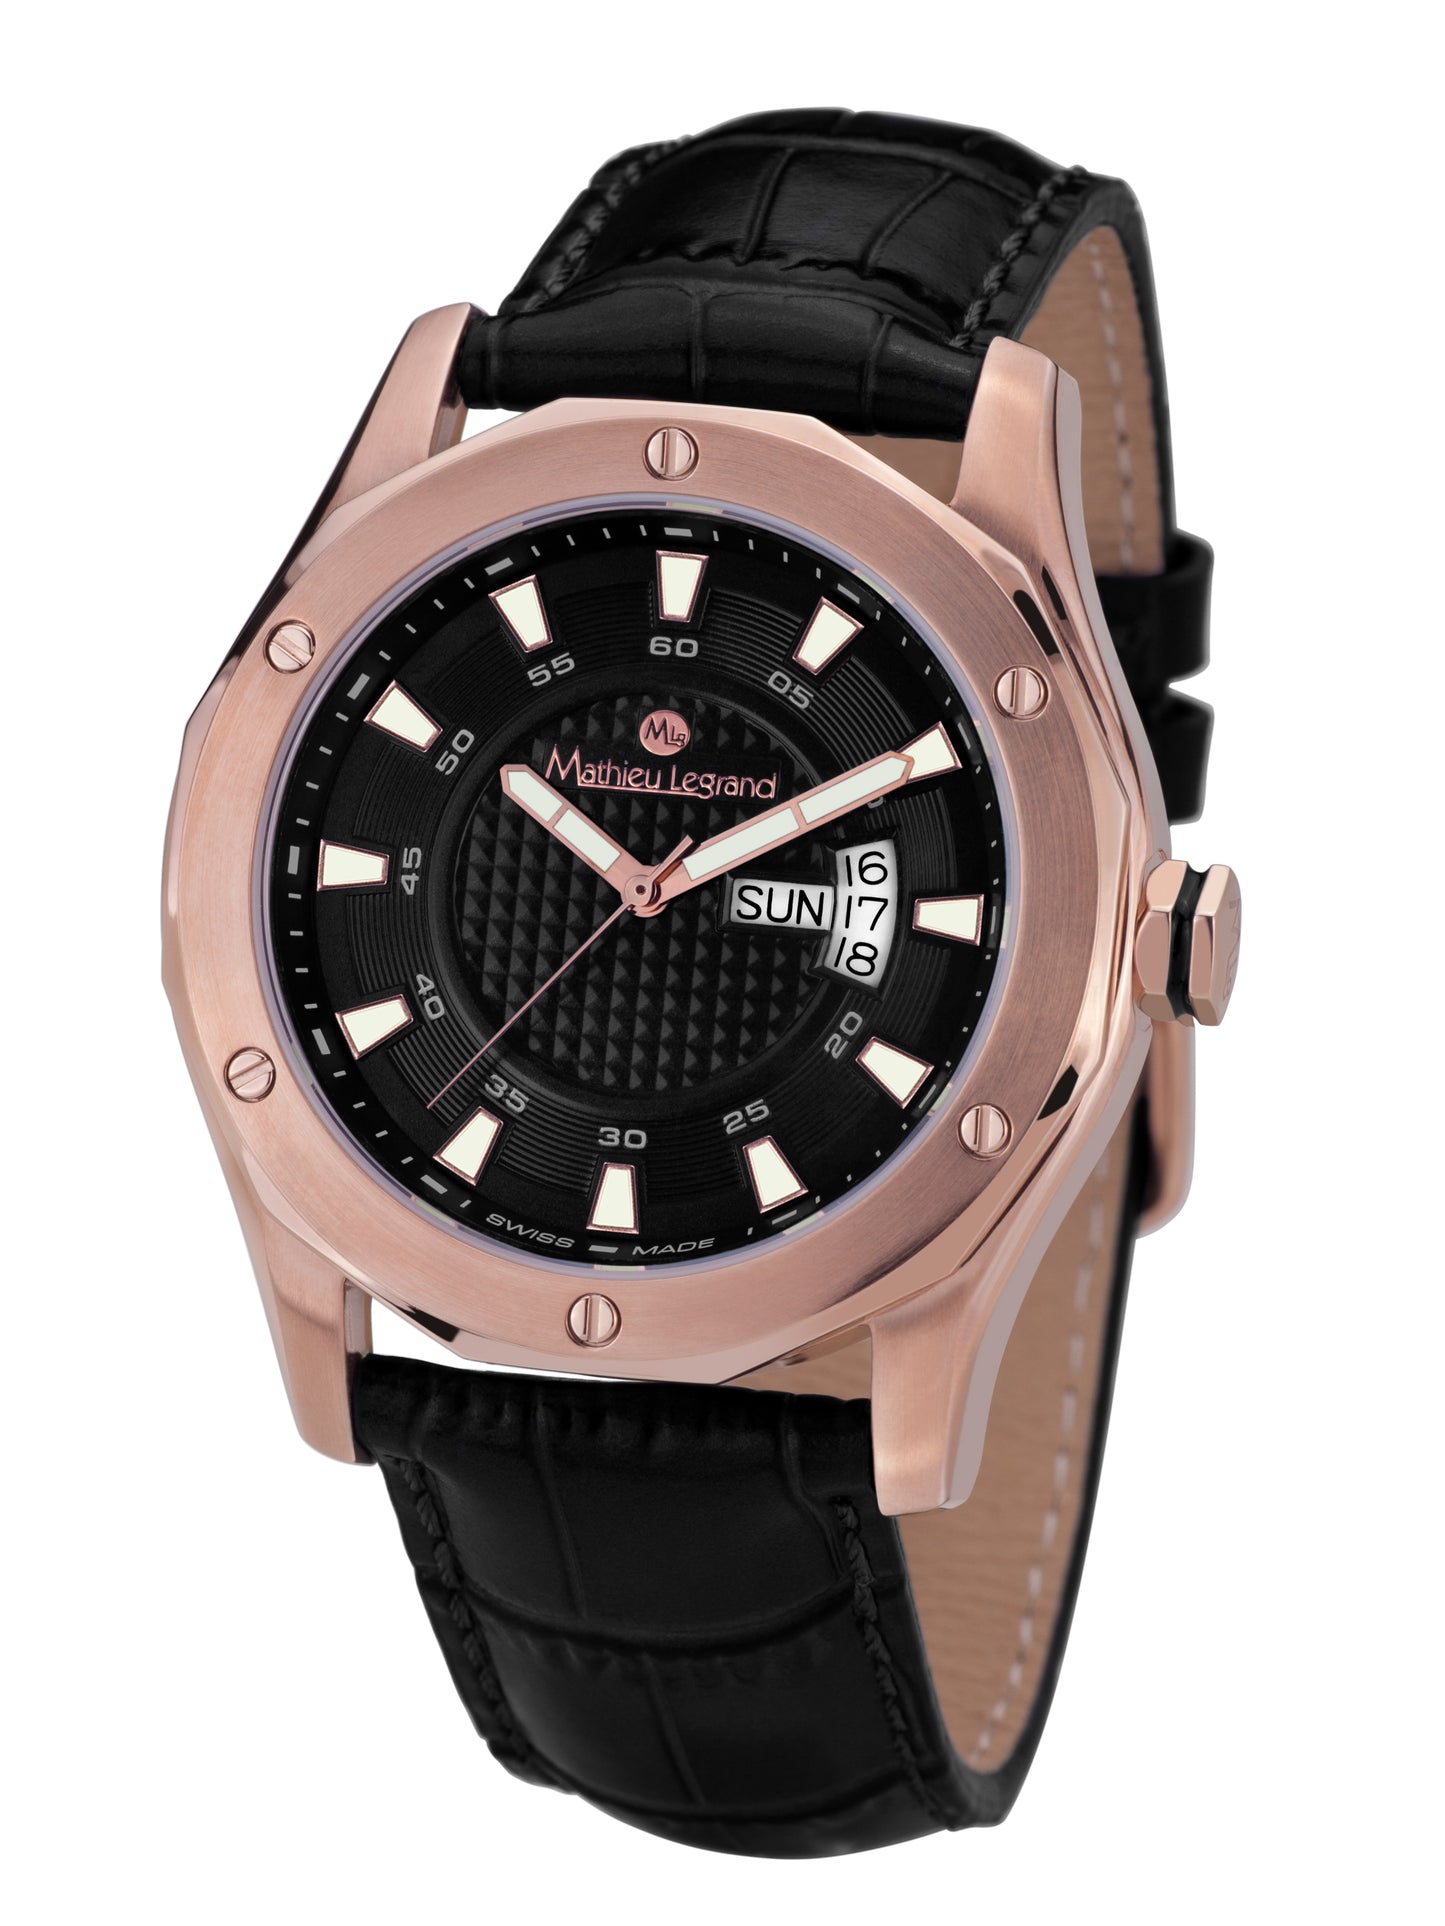 Automatic watches — Dodécagone — Mathieu Legrand — rosegold IP black leather